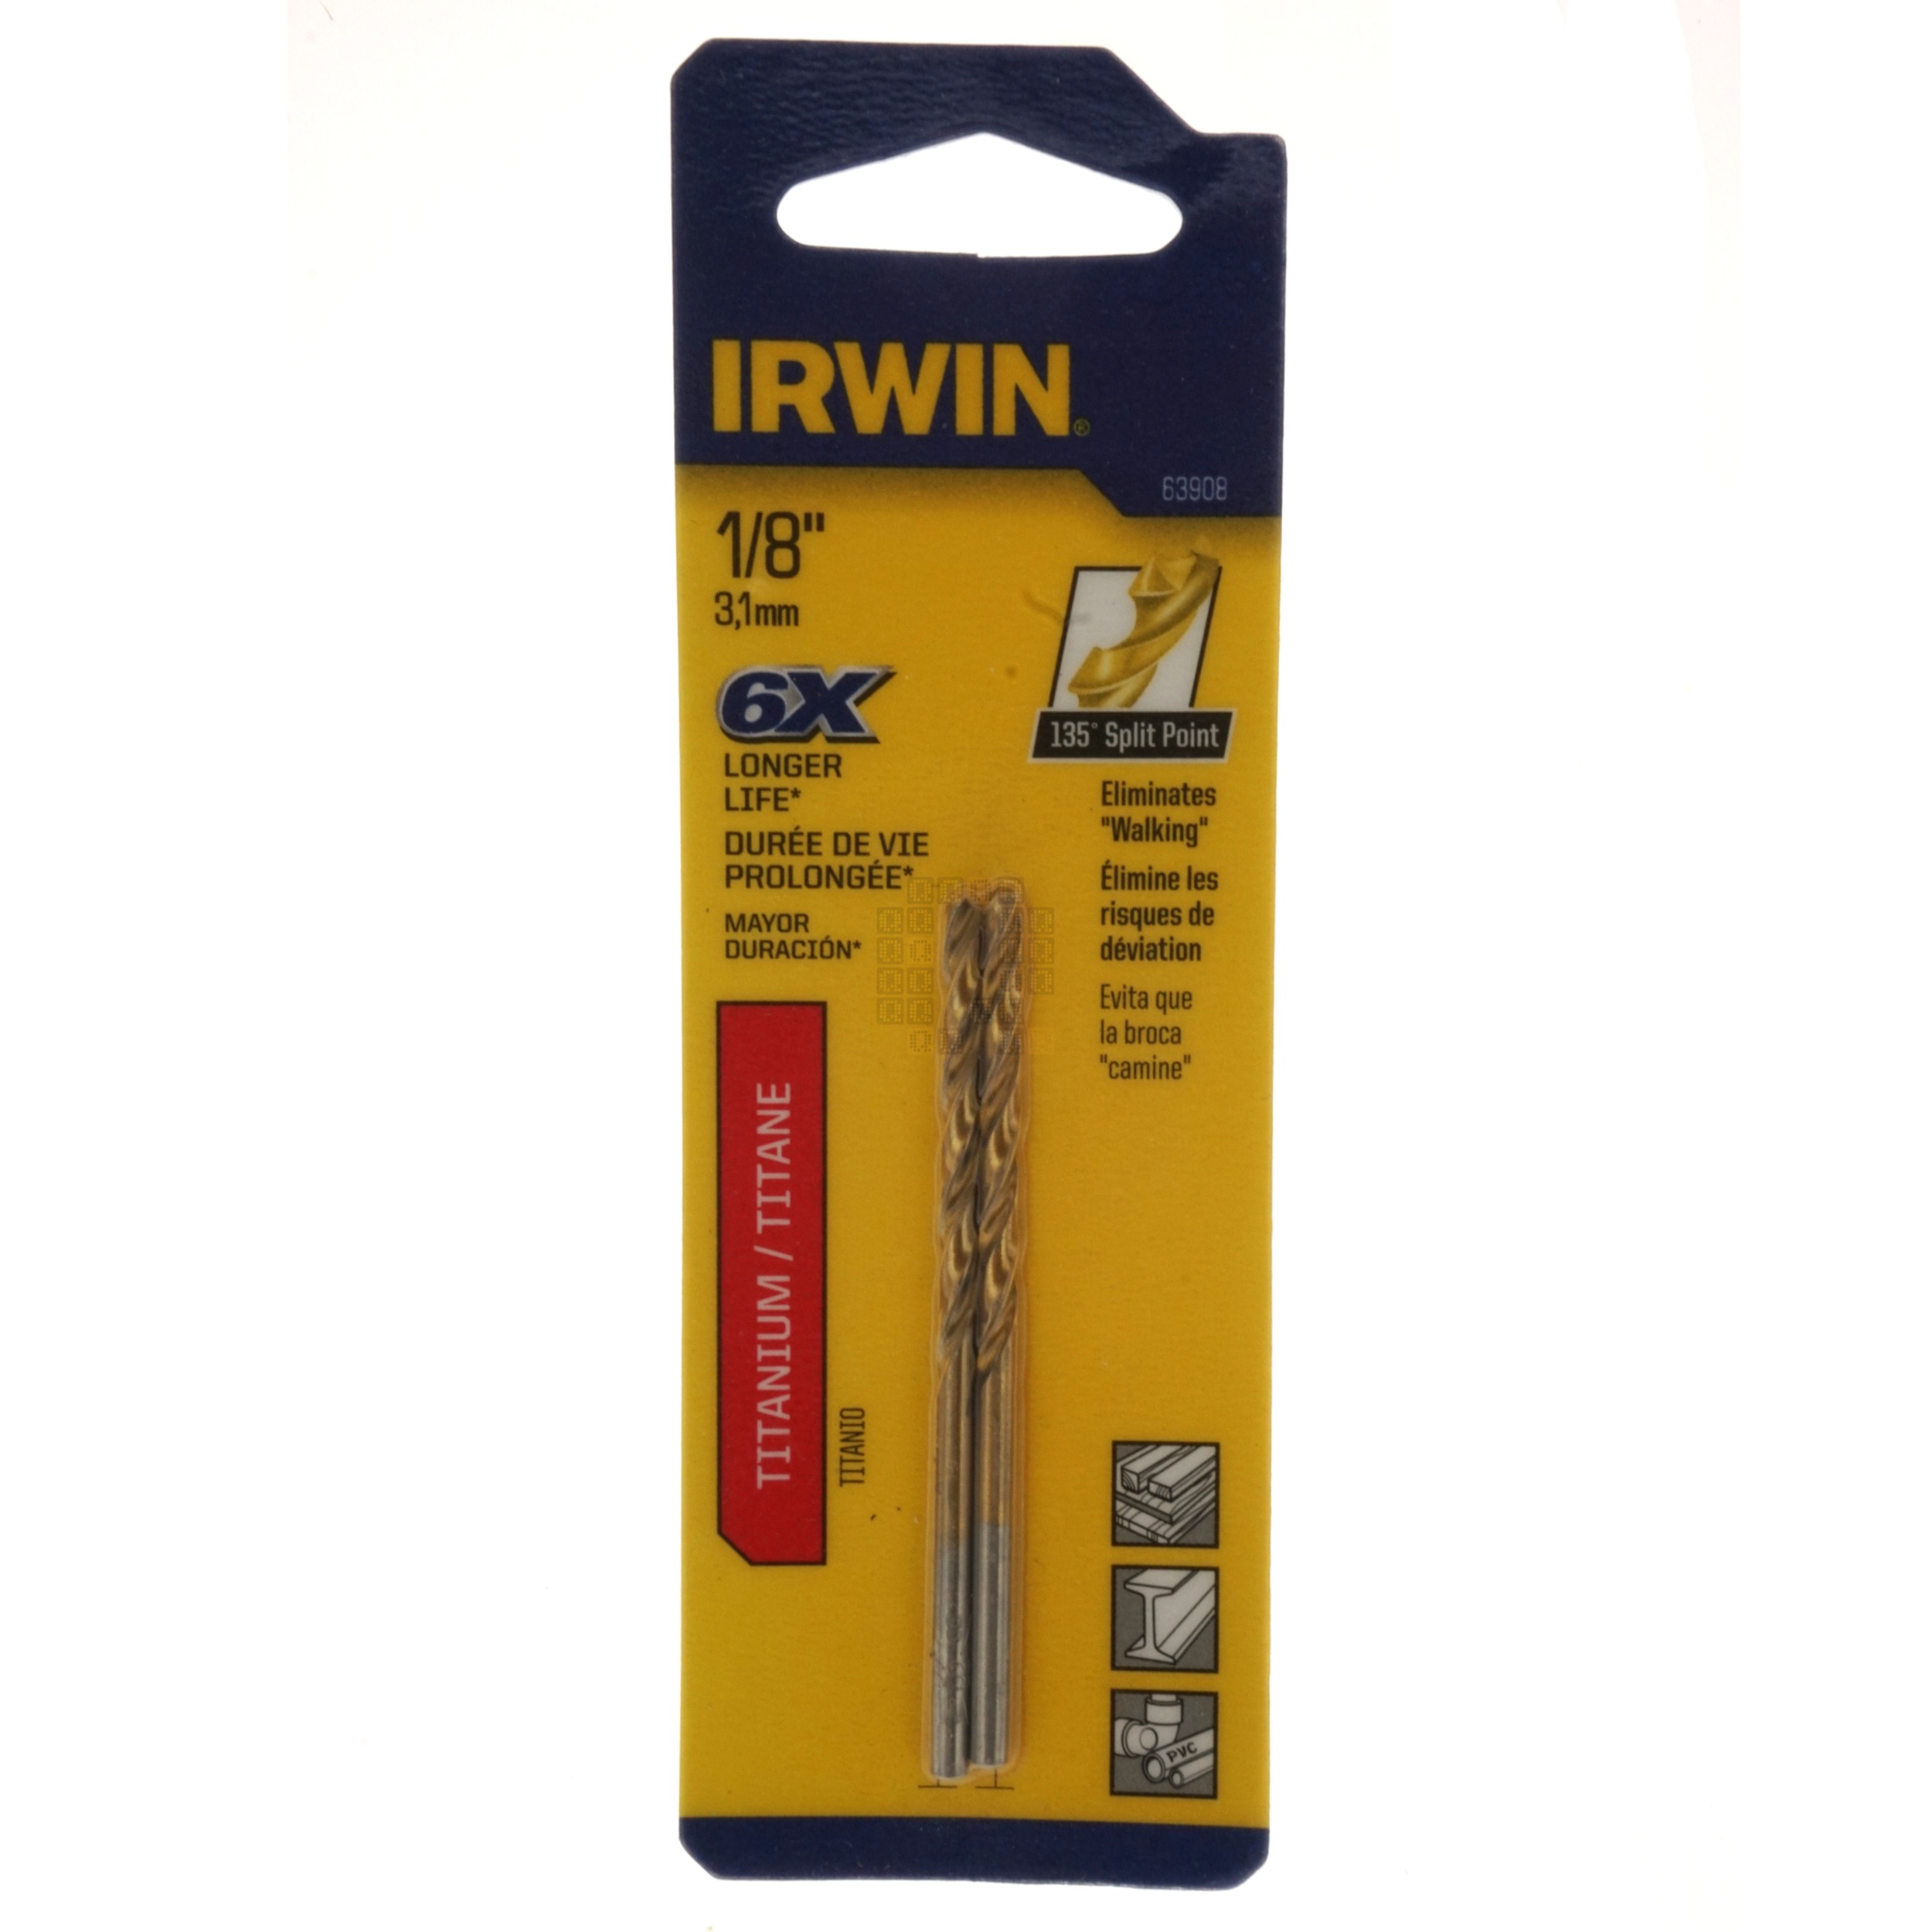 Irwin 63908 1/8" Titanium Nitride Coated 135° Split Point Drill Bits, 2-Pack